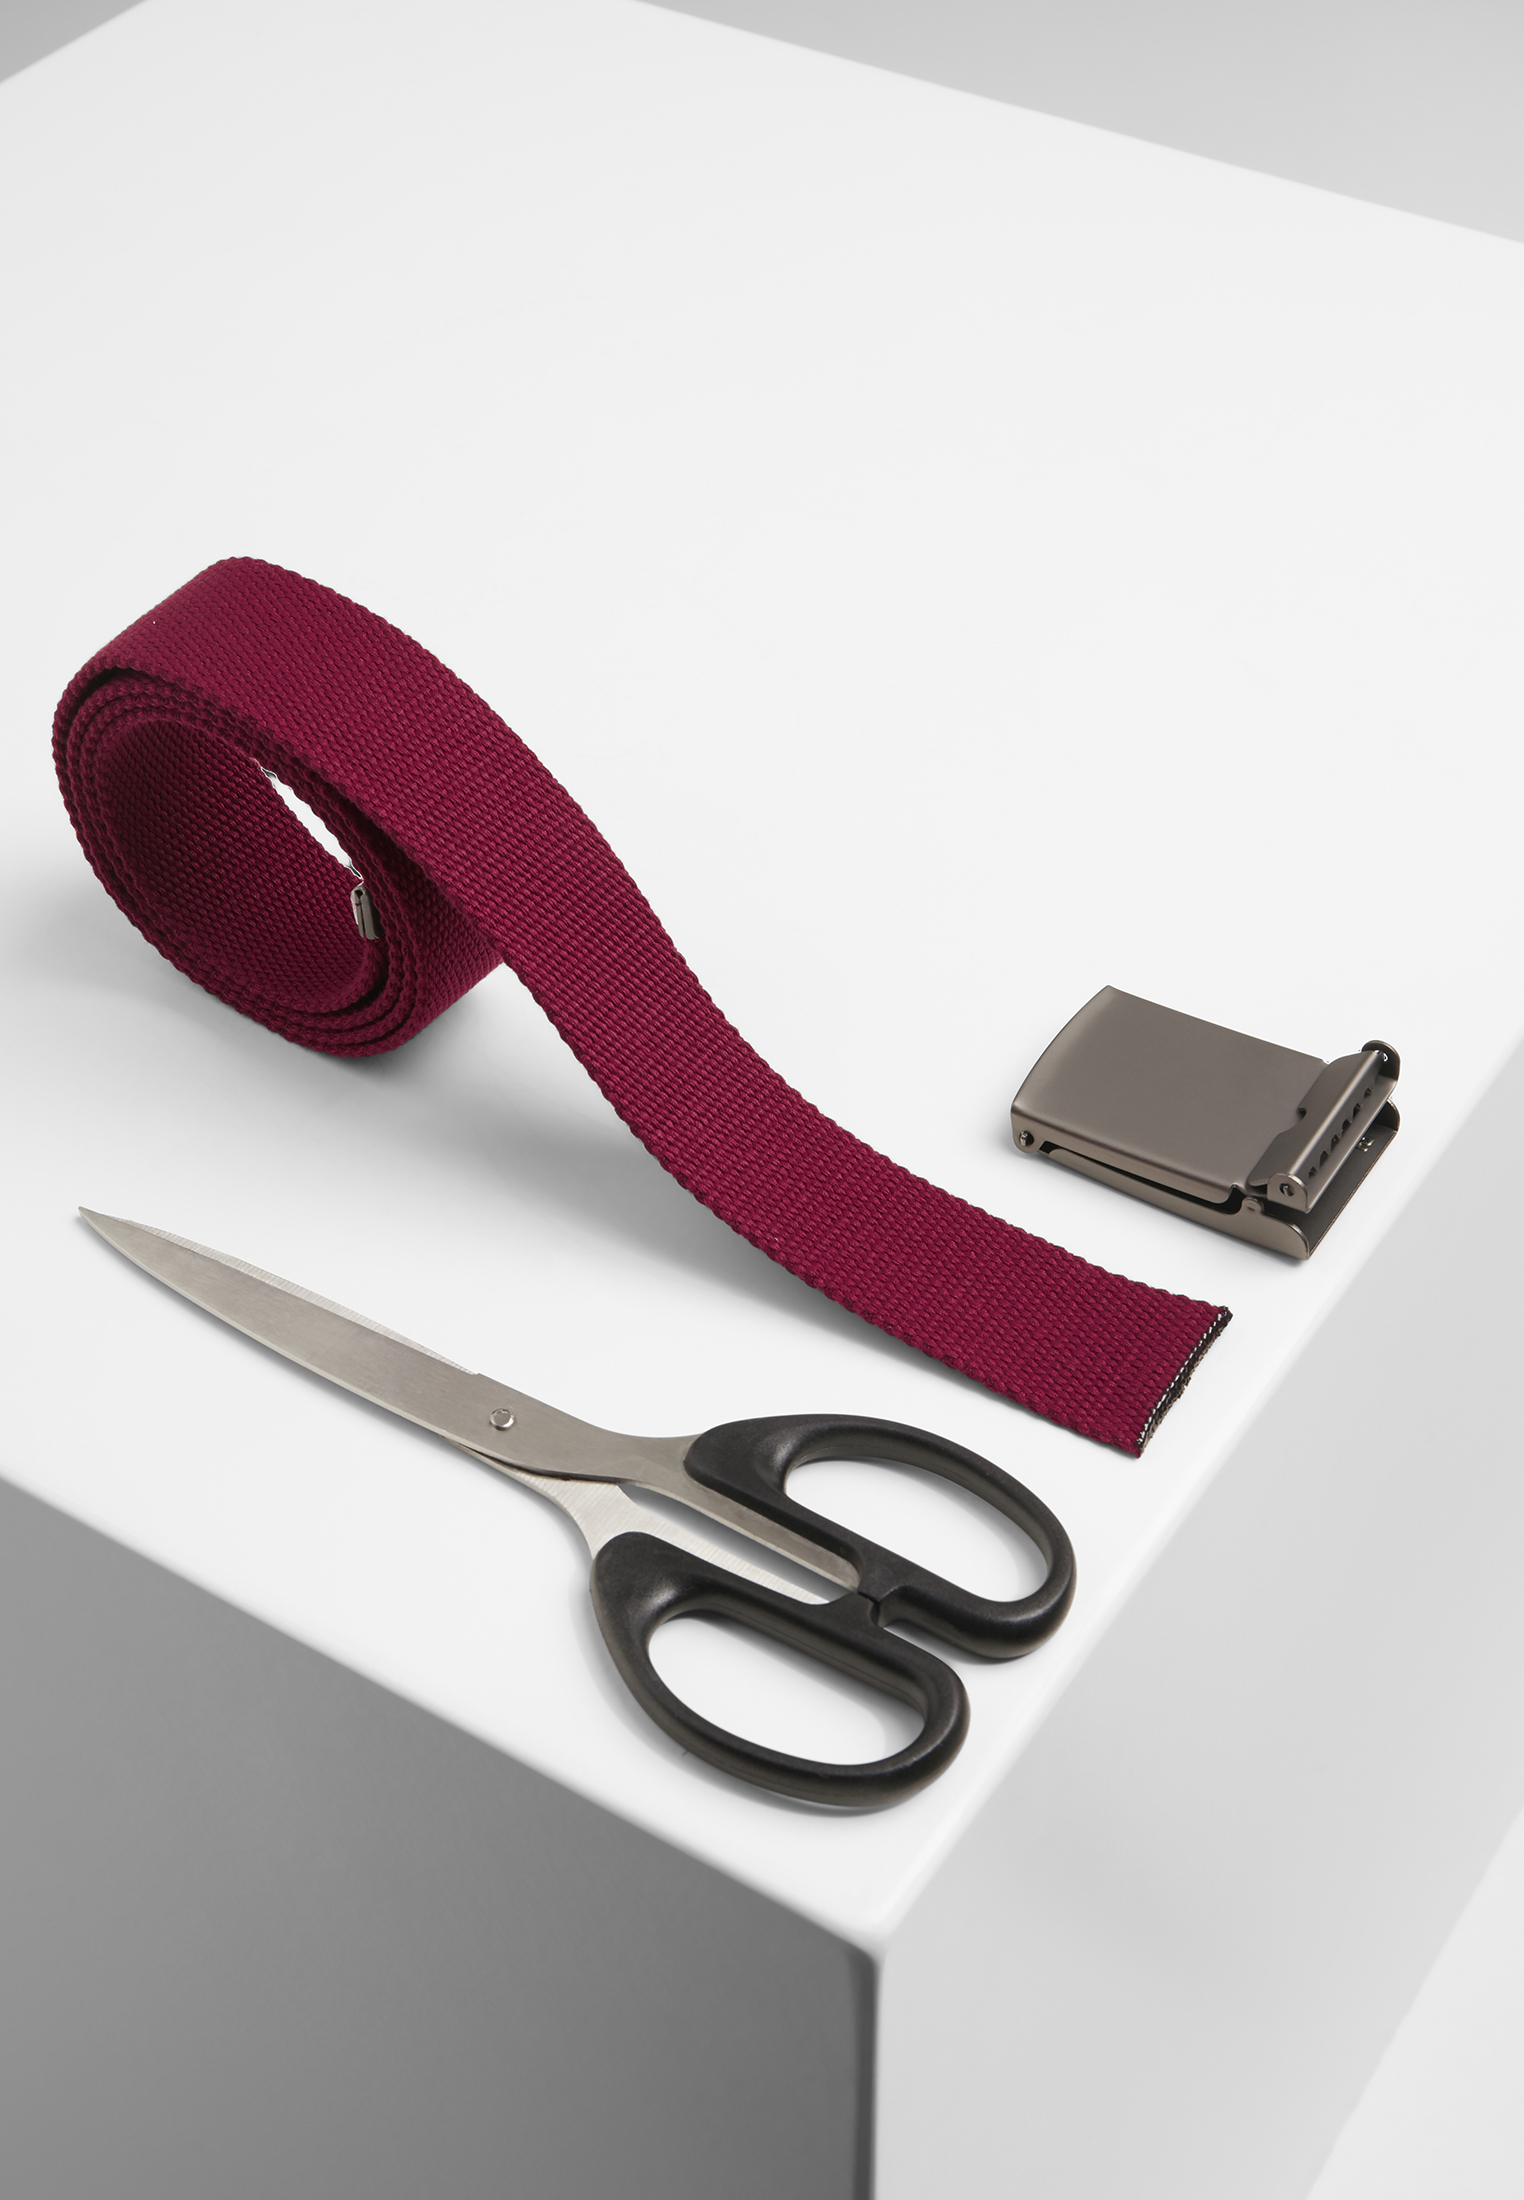 G?rtel Canvas Belts in Farbe burgundy